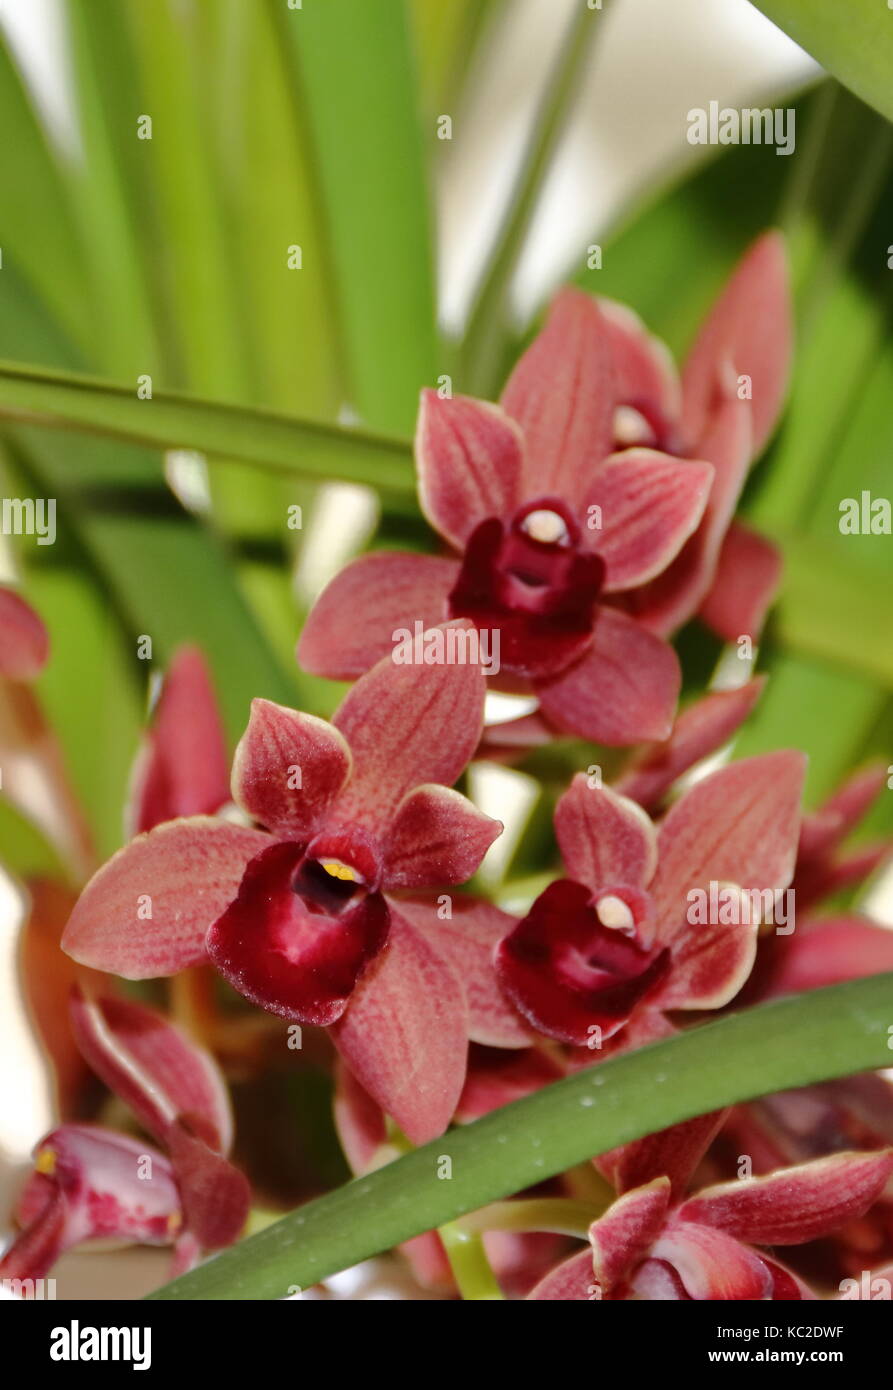 Plantas parasitarias fotografías e imágenes de alta resolución - Alamy